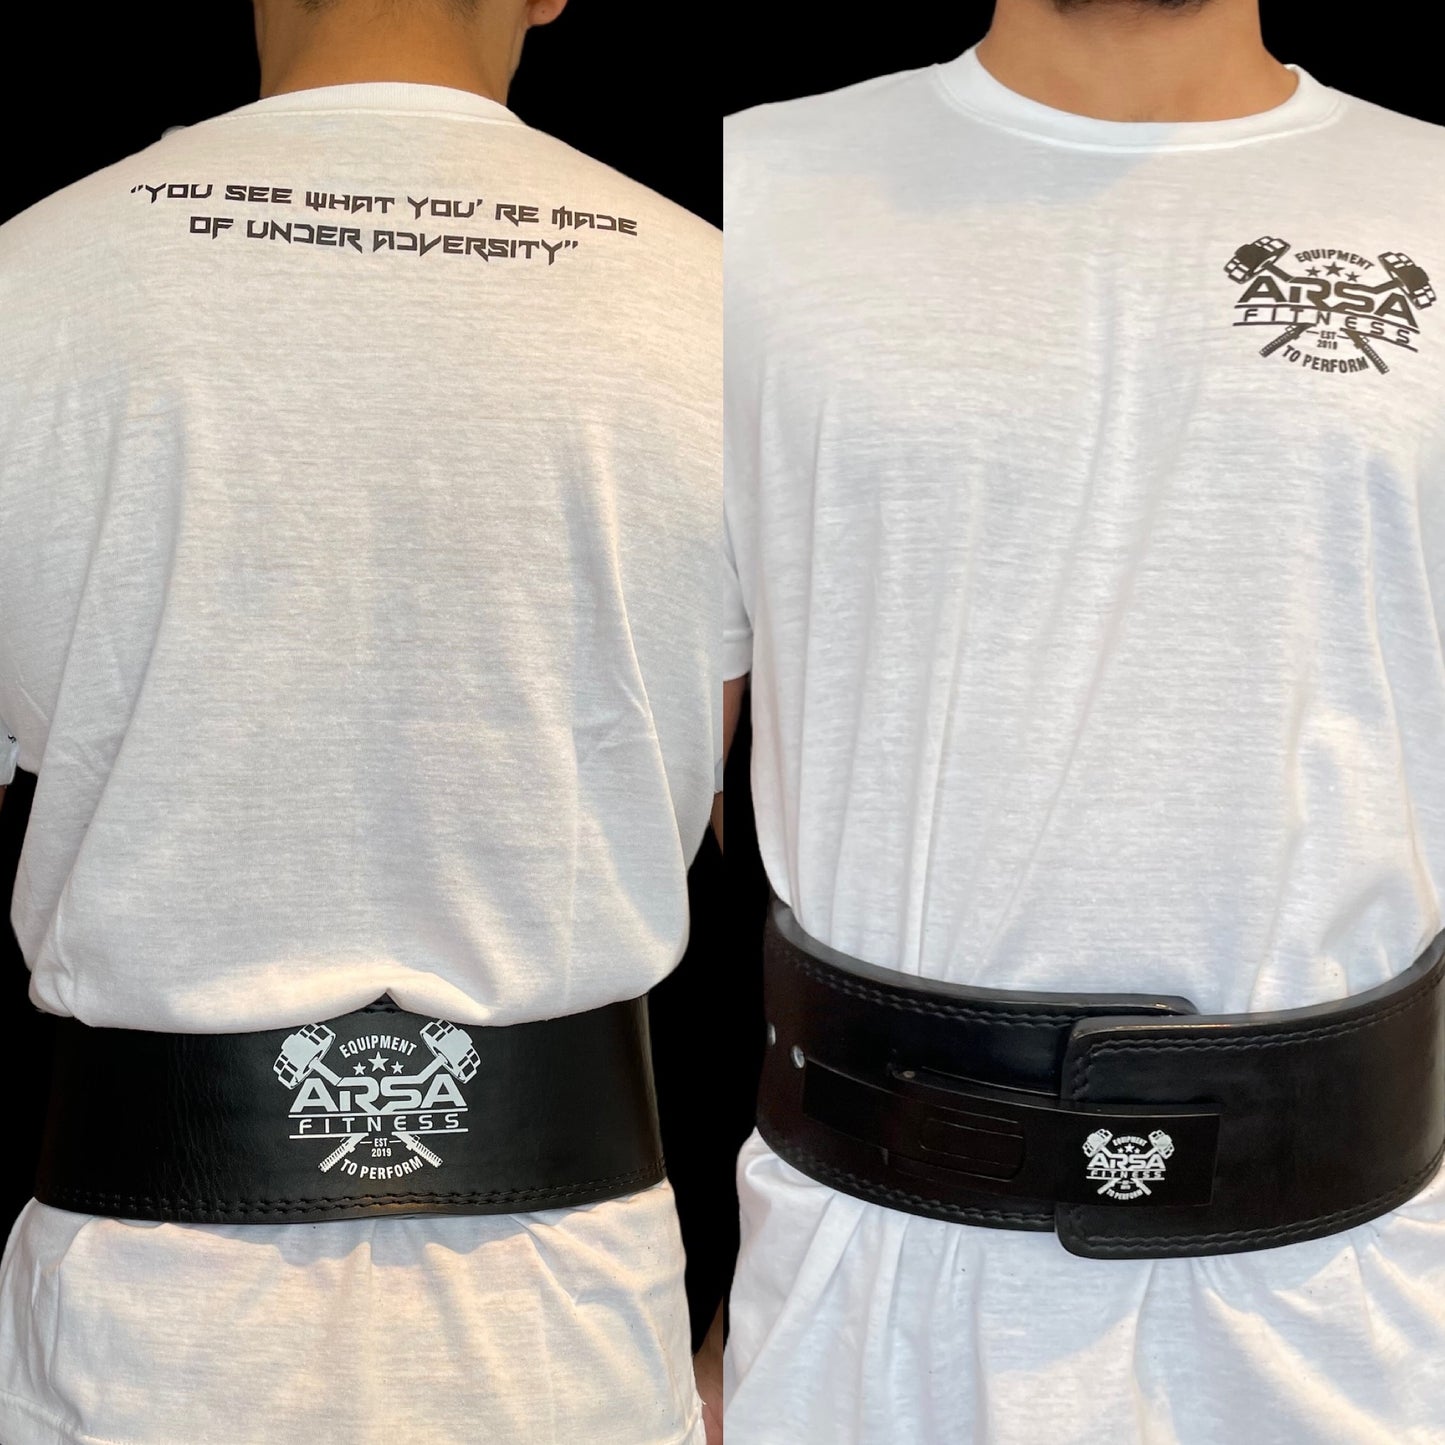 10mm Lever Leather Belt - Strongman